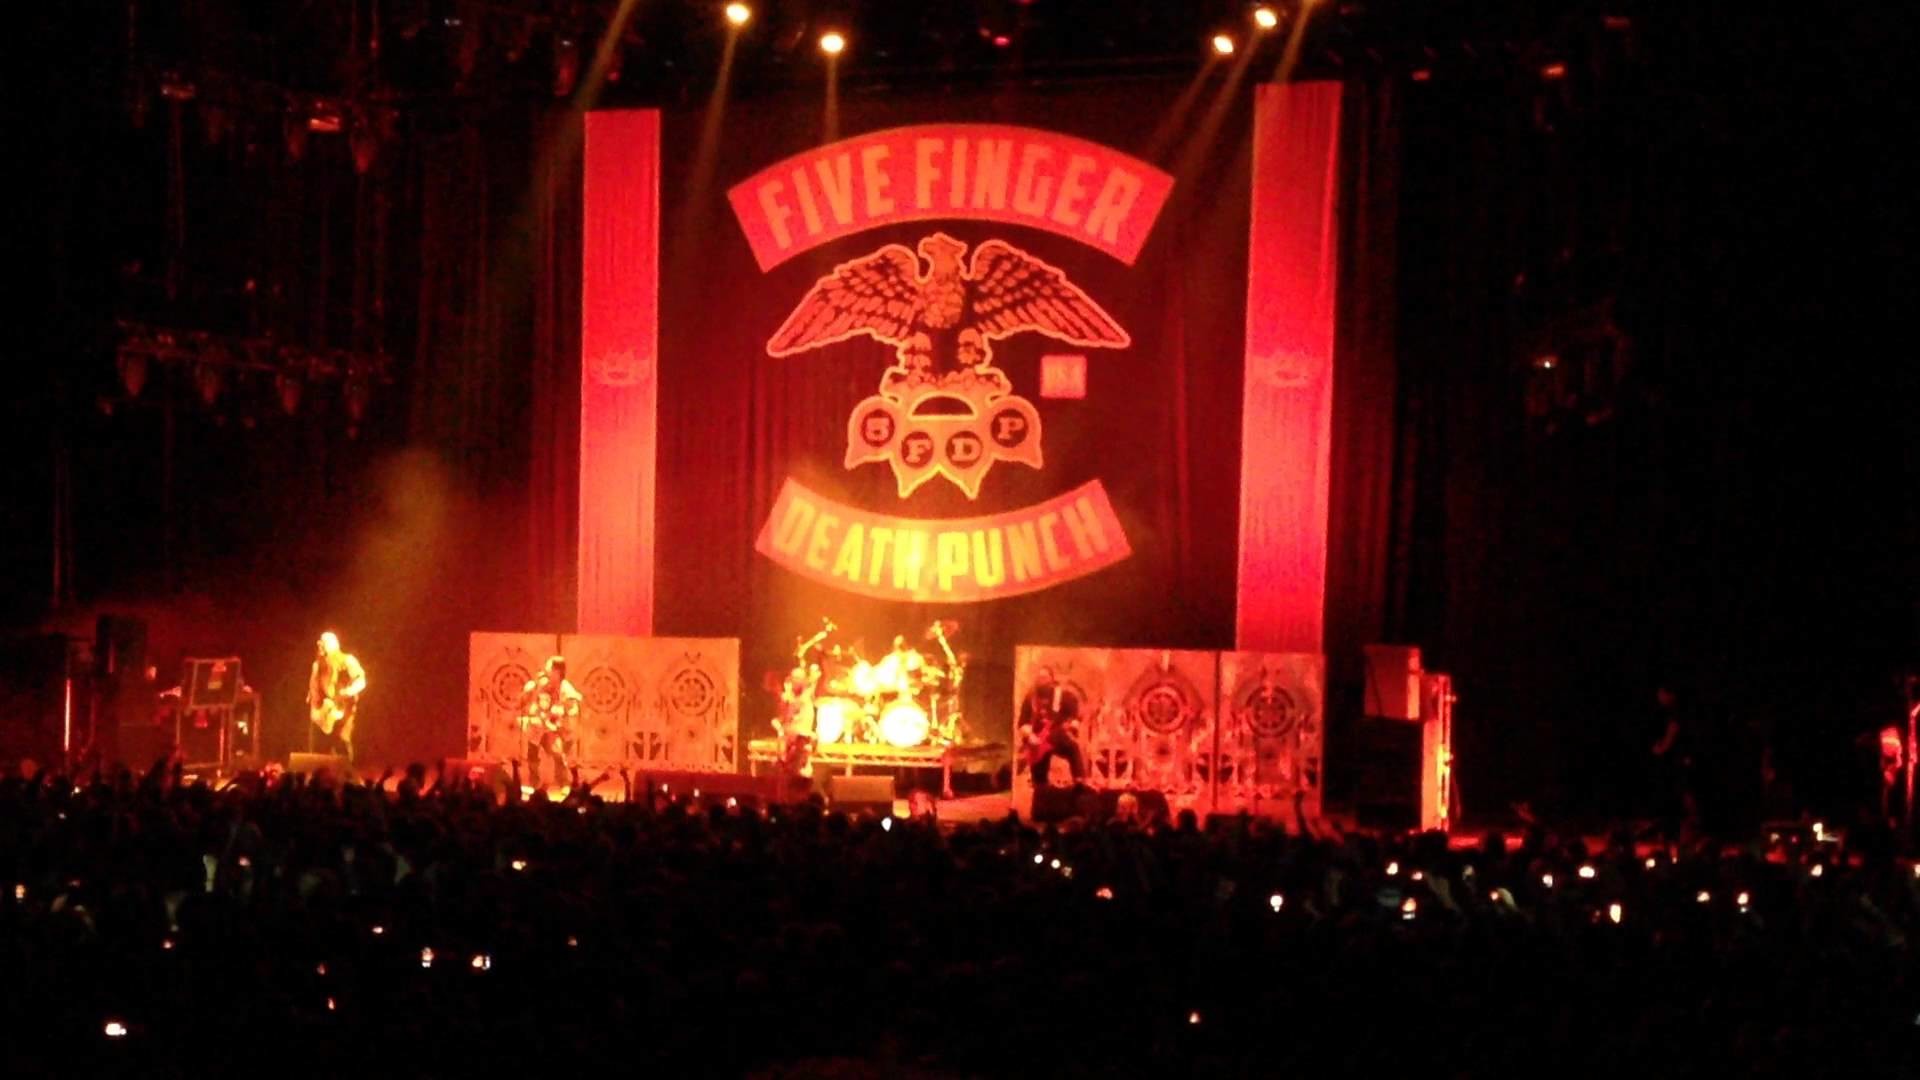 1920x1080 Five Finger Death Punch - Burn MF Live in Oslo Spectrum 9 nov 2013 HD 1080p